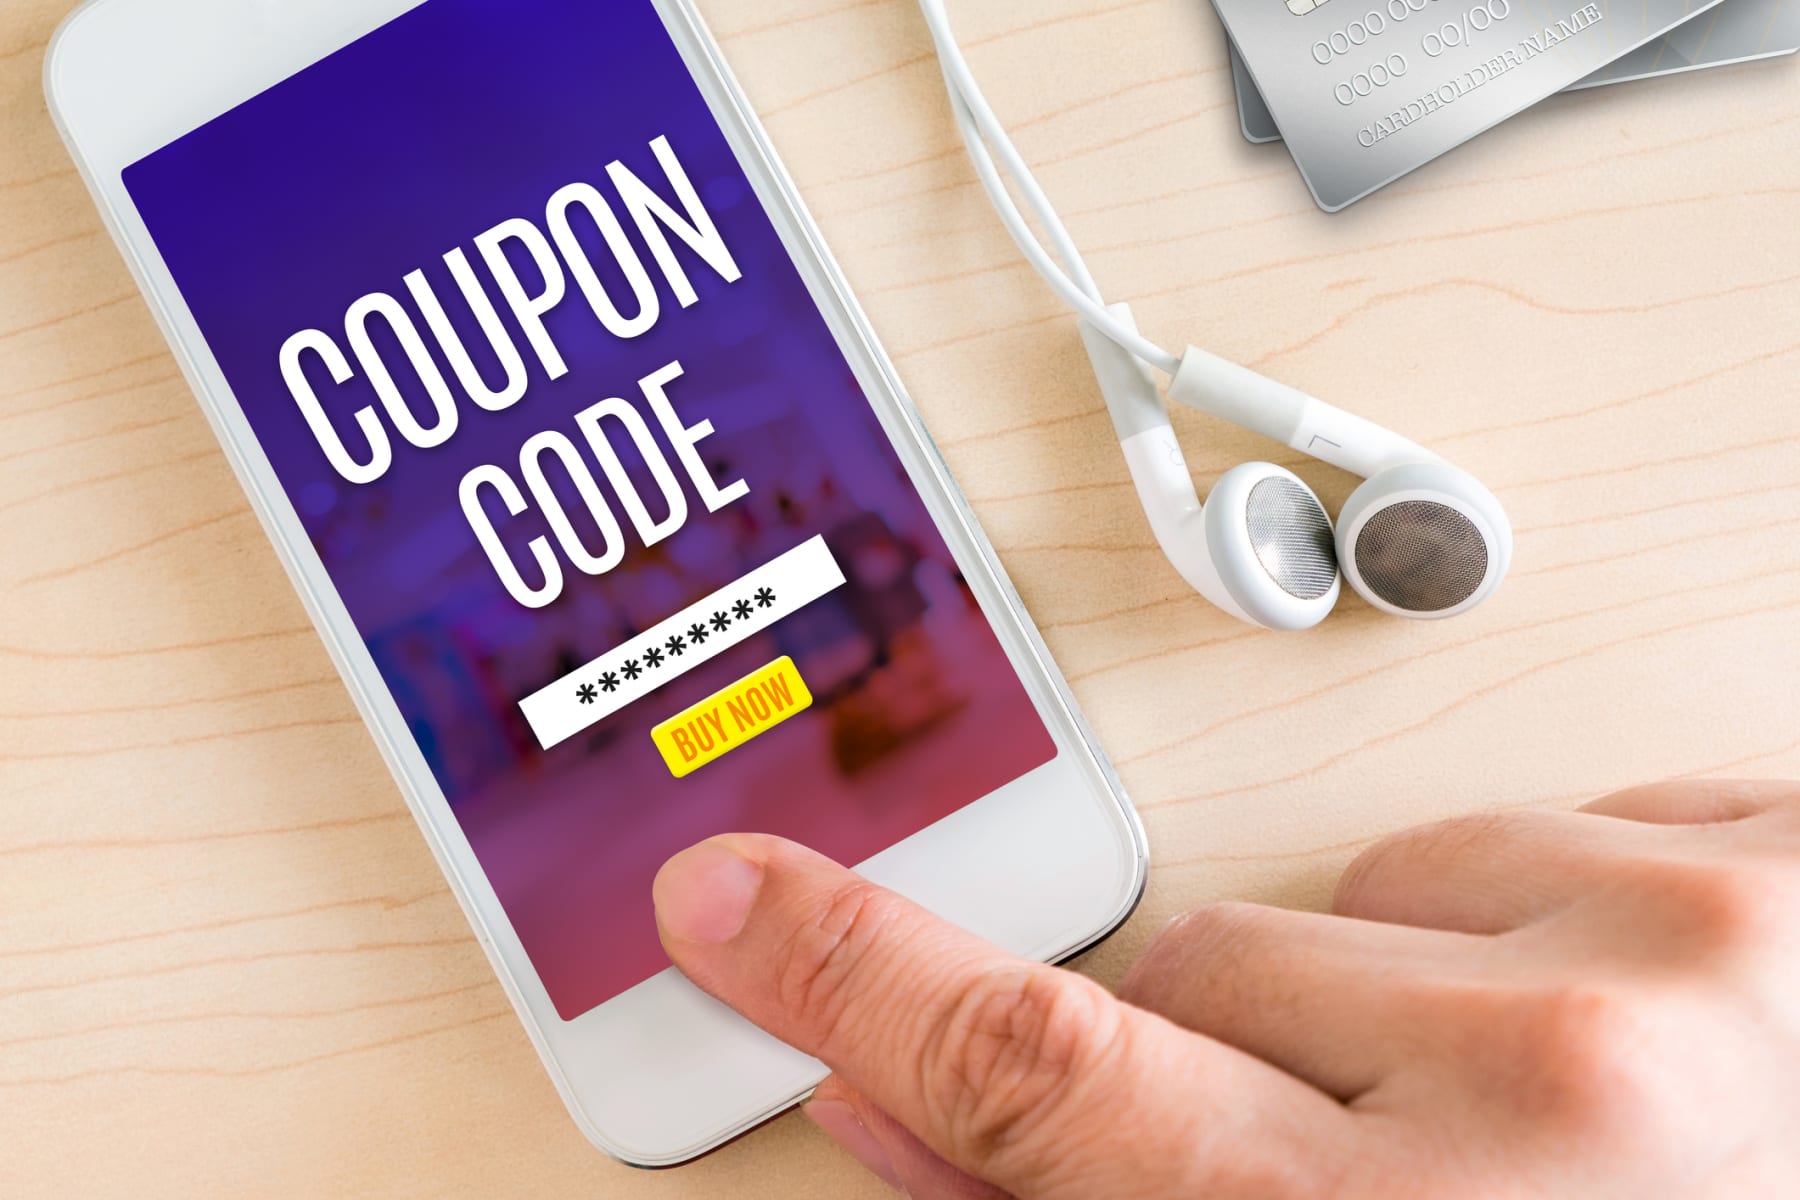 Premium Vector   Promo code. gift voucher with coupon code. premium egift  card background for e-commerce, online shopping. marketing. illustration.